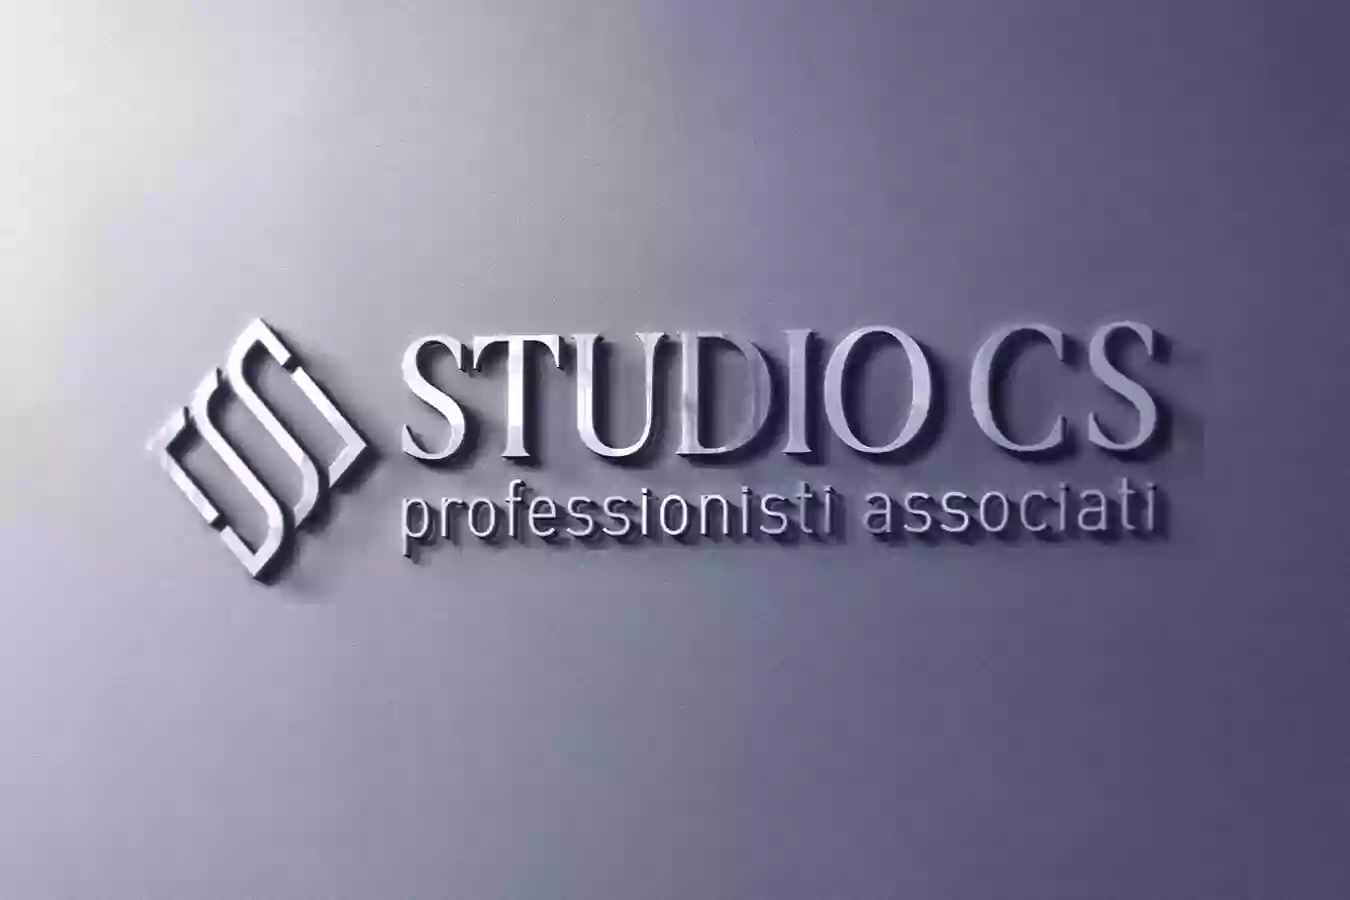 Studio CS - Studio Commercialisti Associati Milano